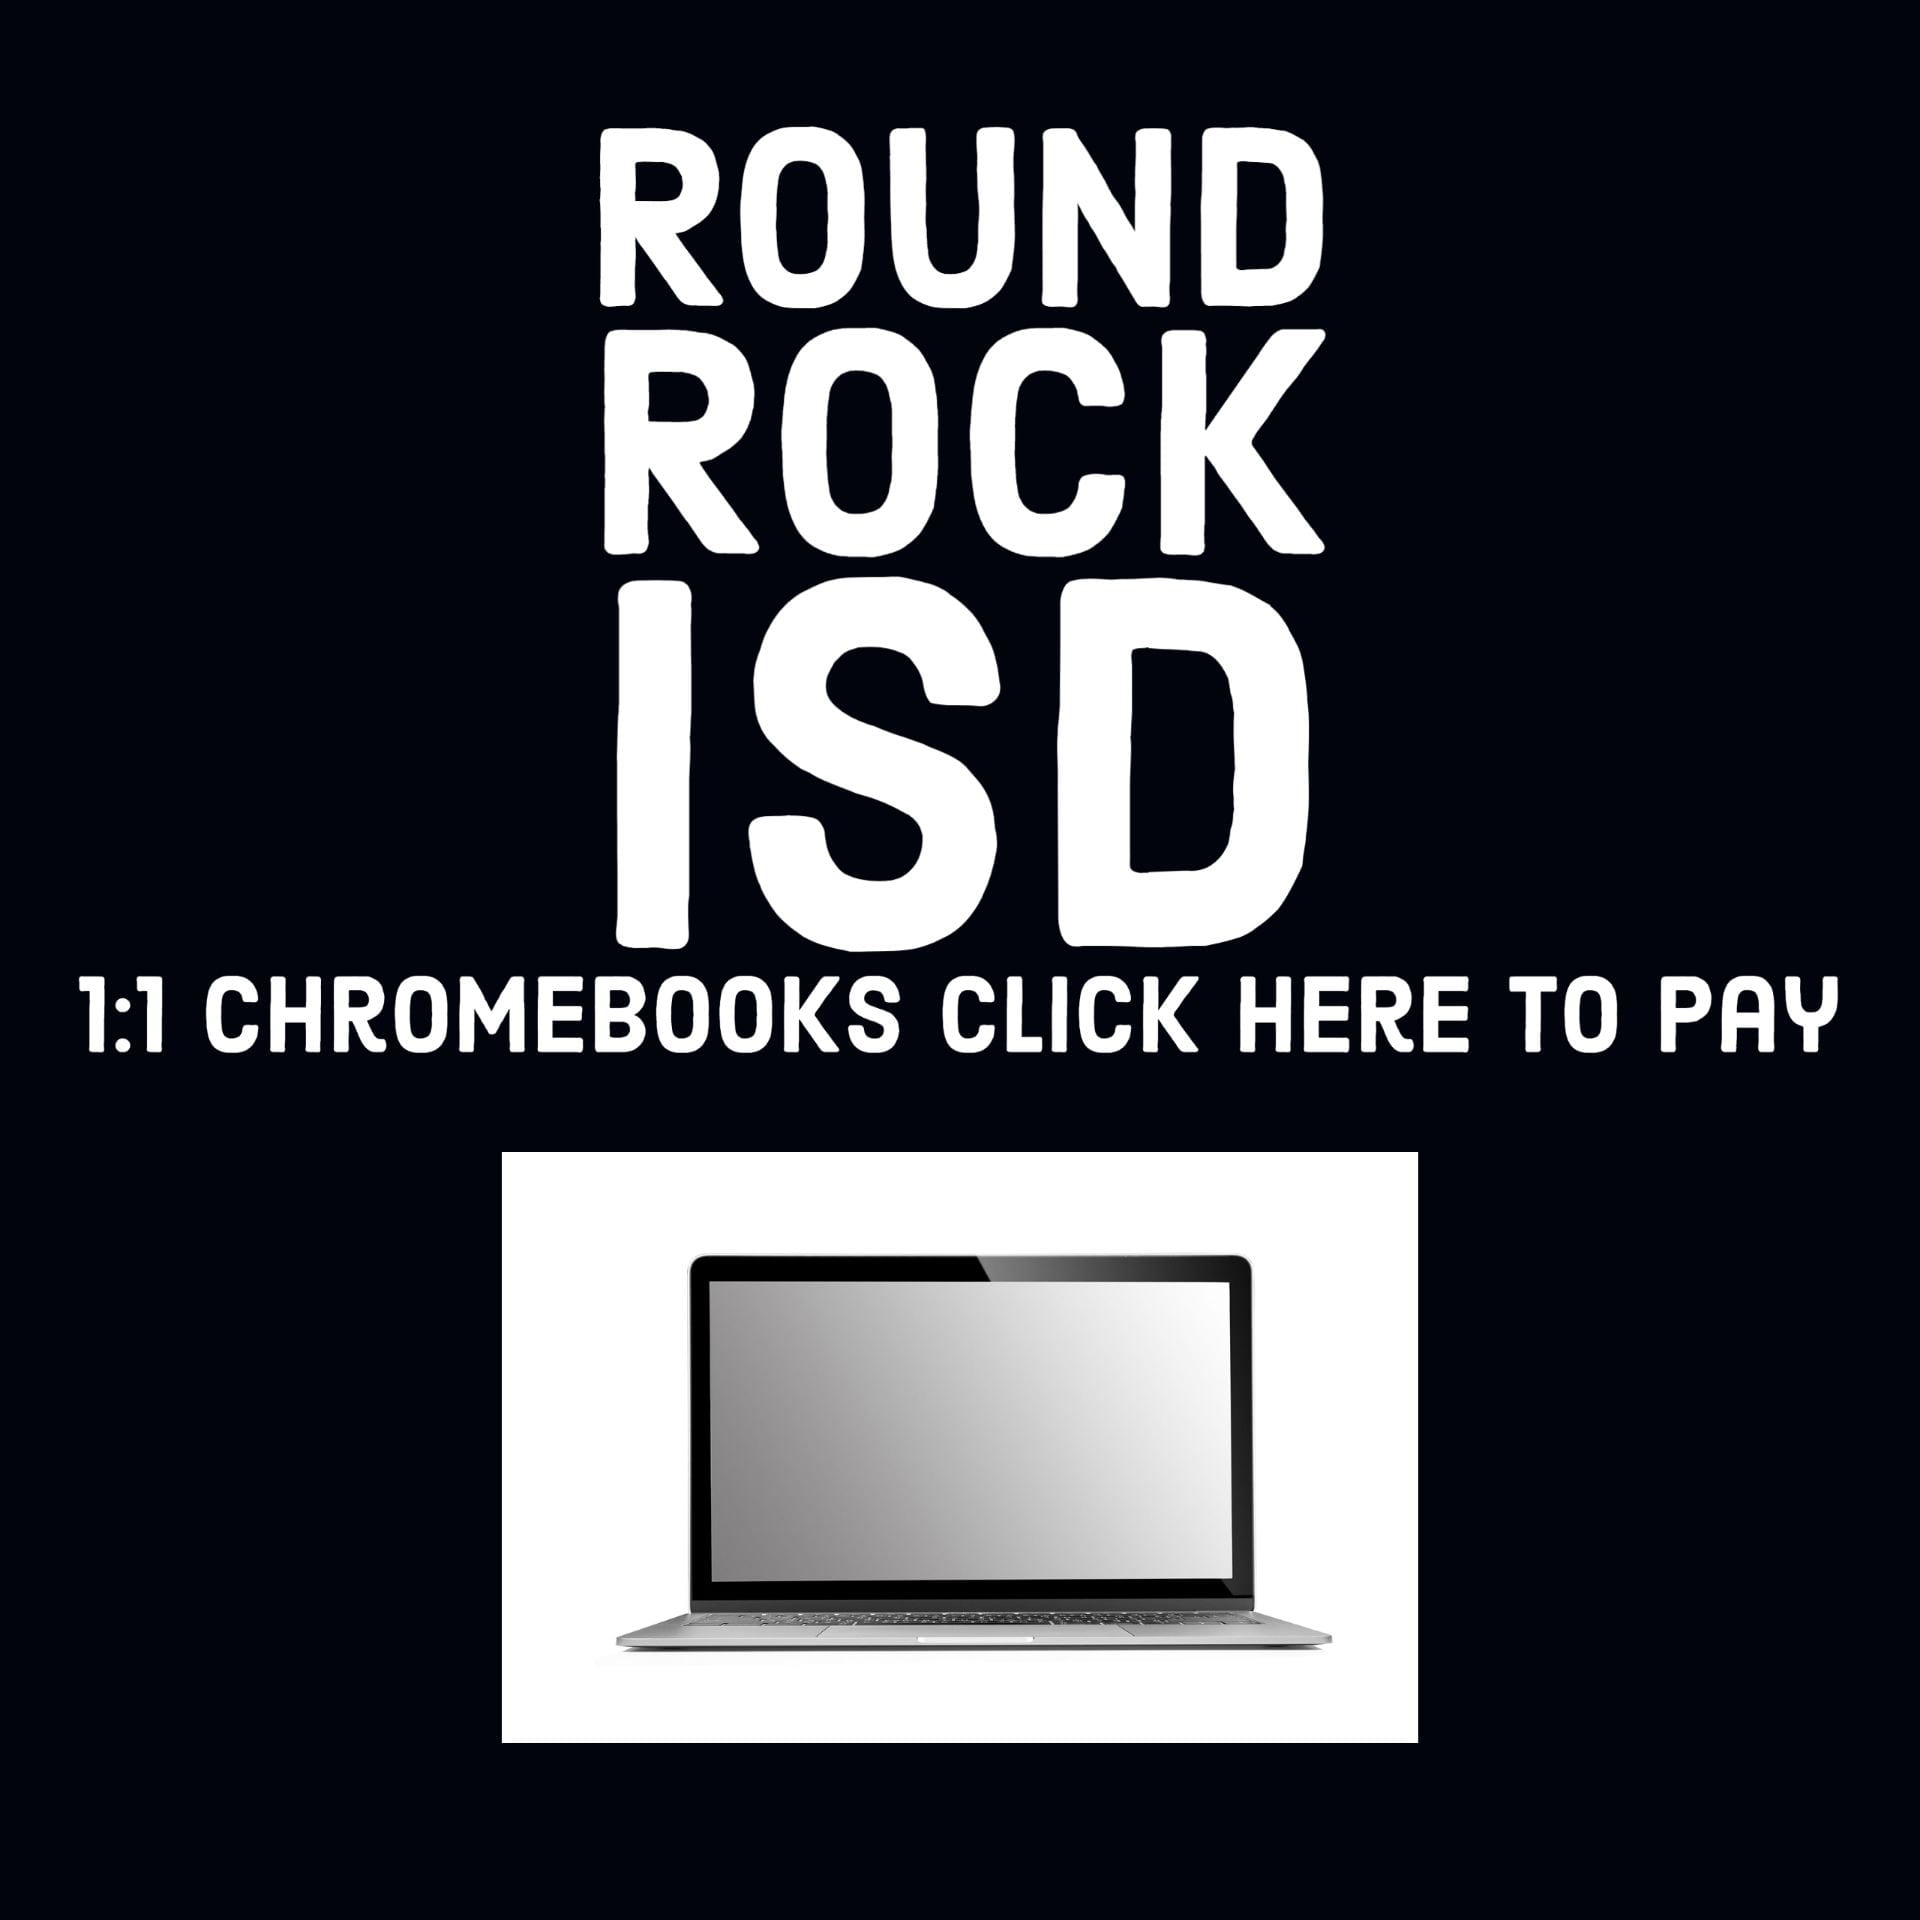 Round Rock ISD 1:1 Chromebooks Click Here To Pay